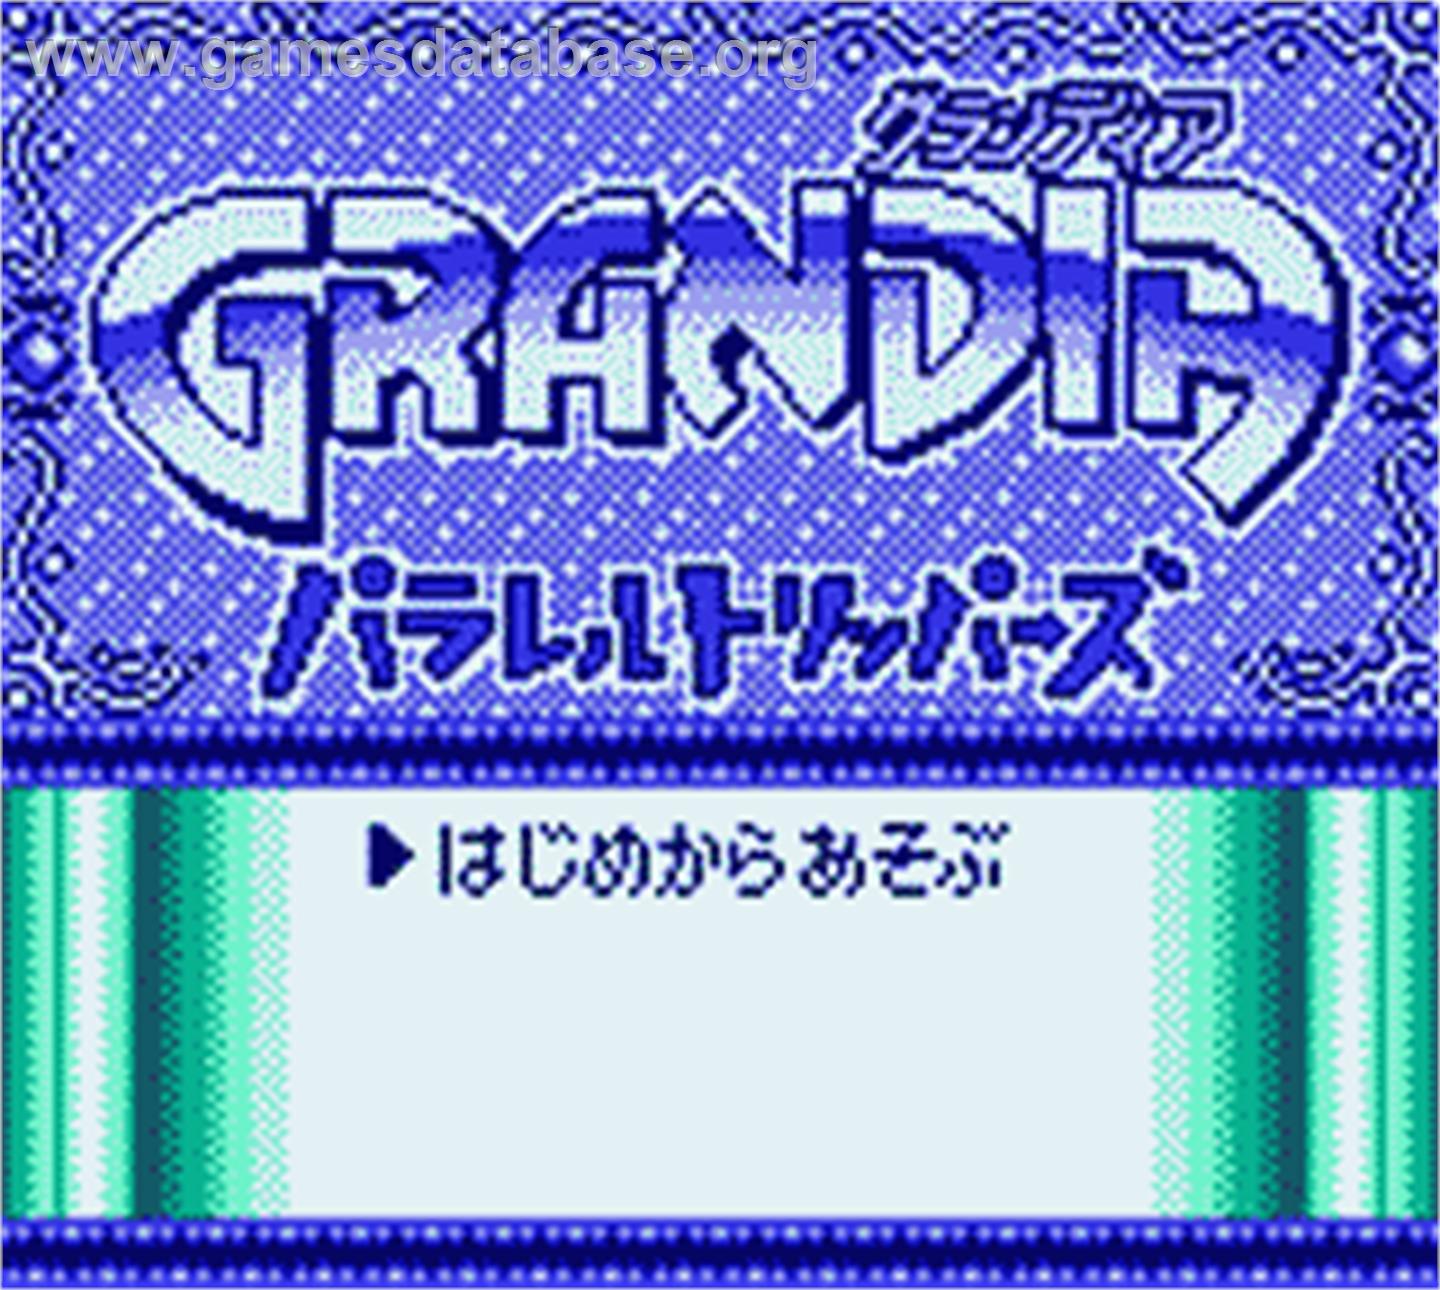 Grandia: Parallel Trippers - Nintendo Game Boy Color - Artwork - Title Screen